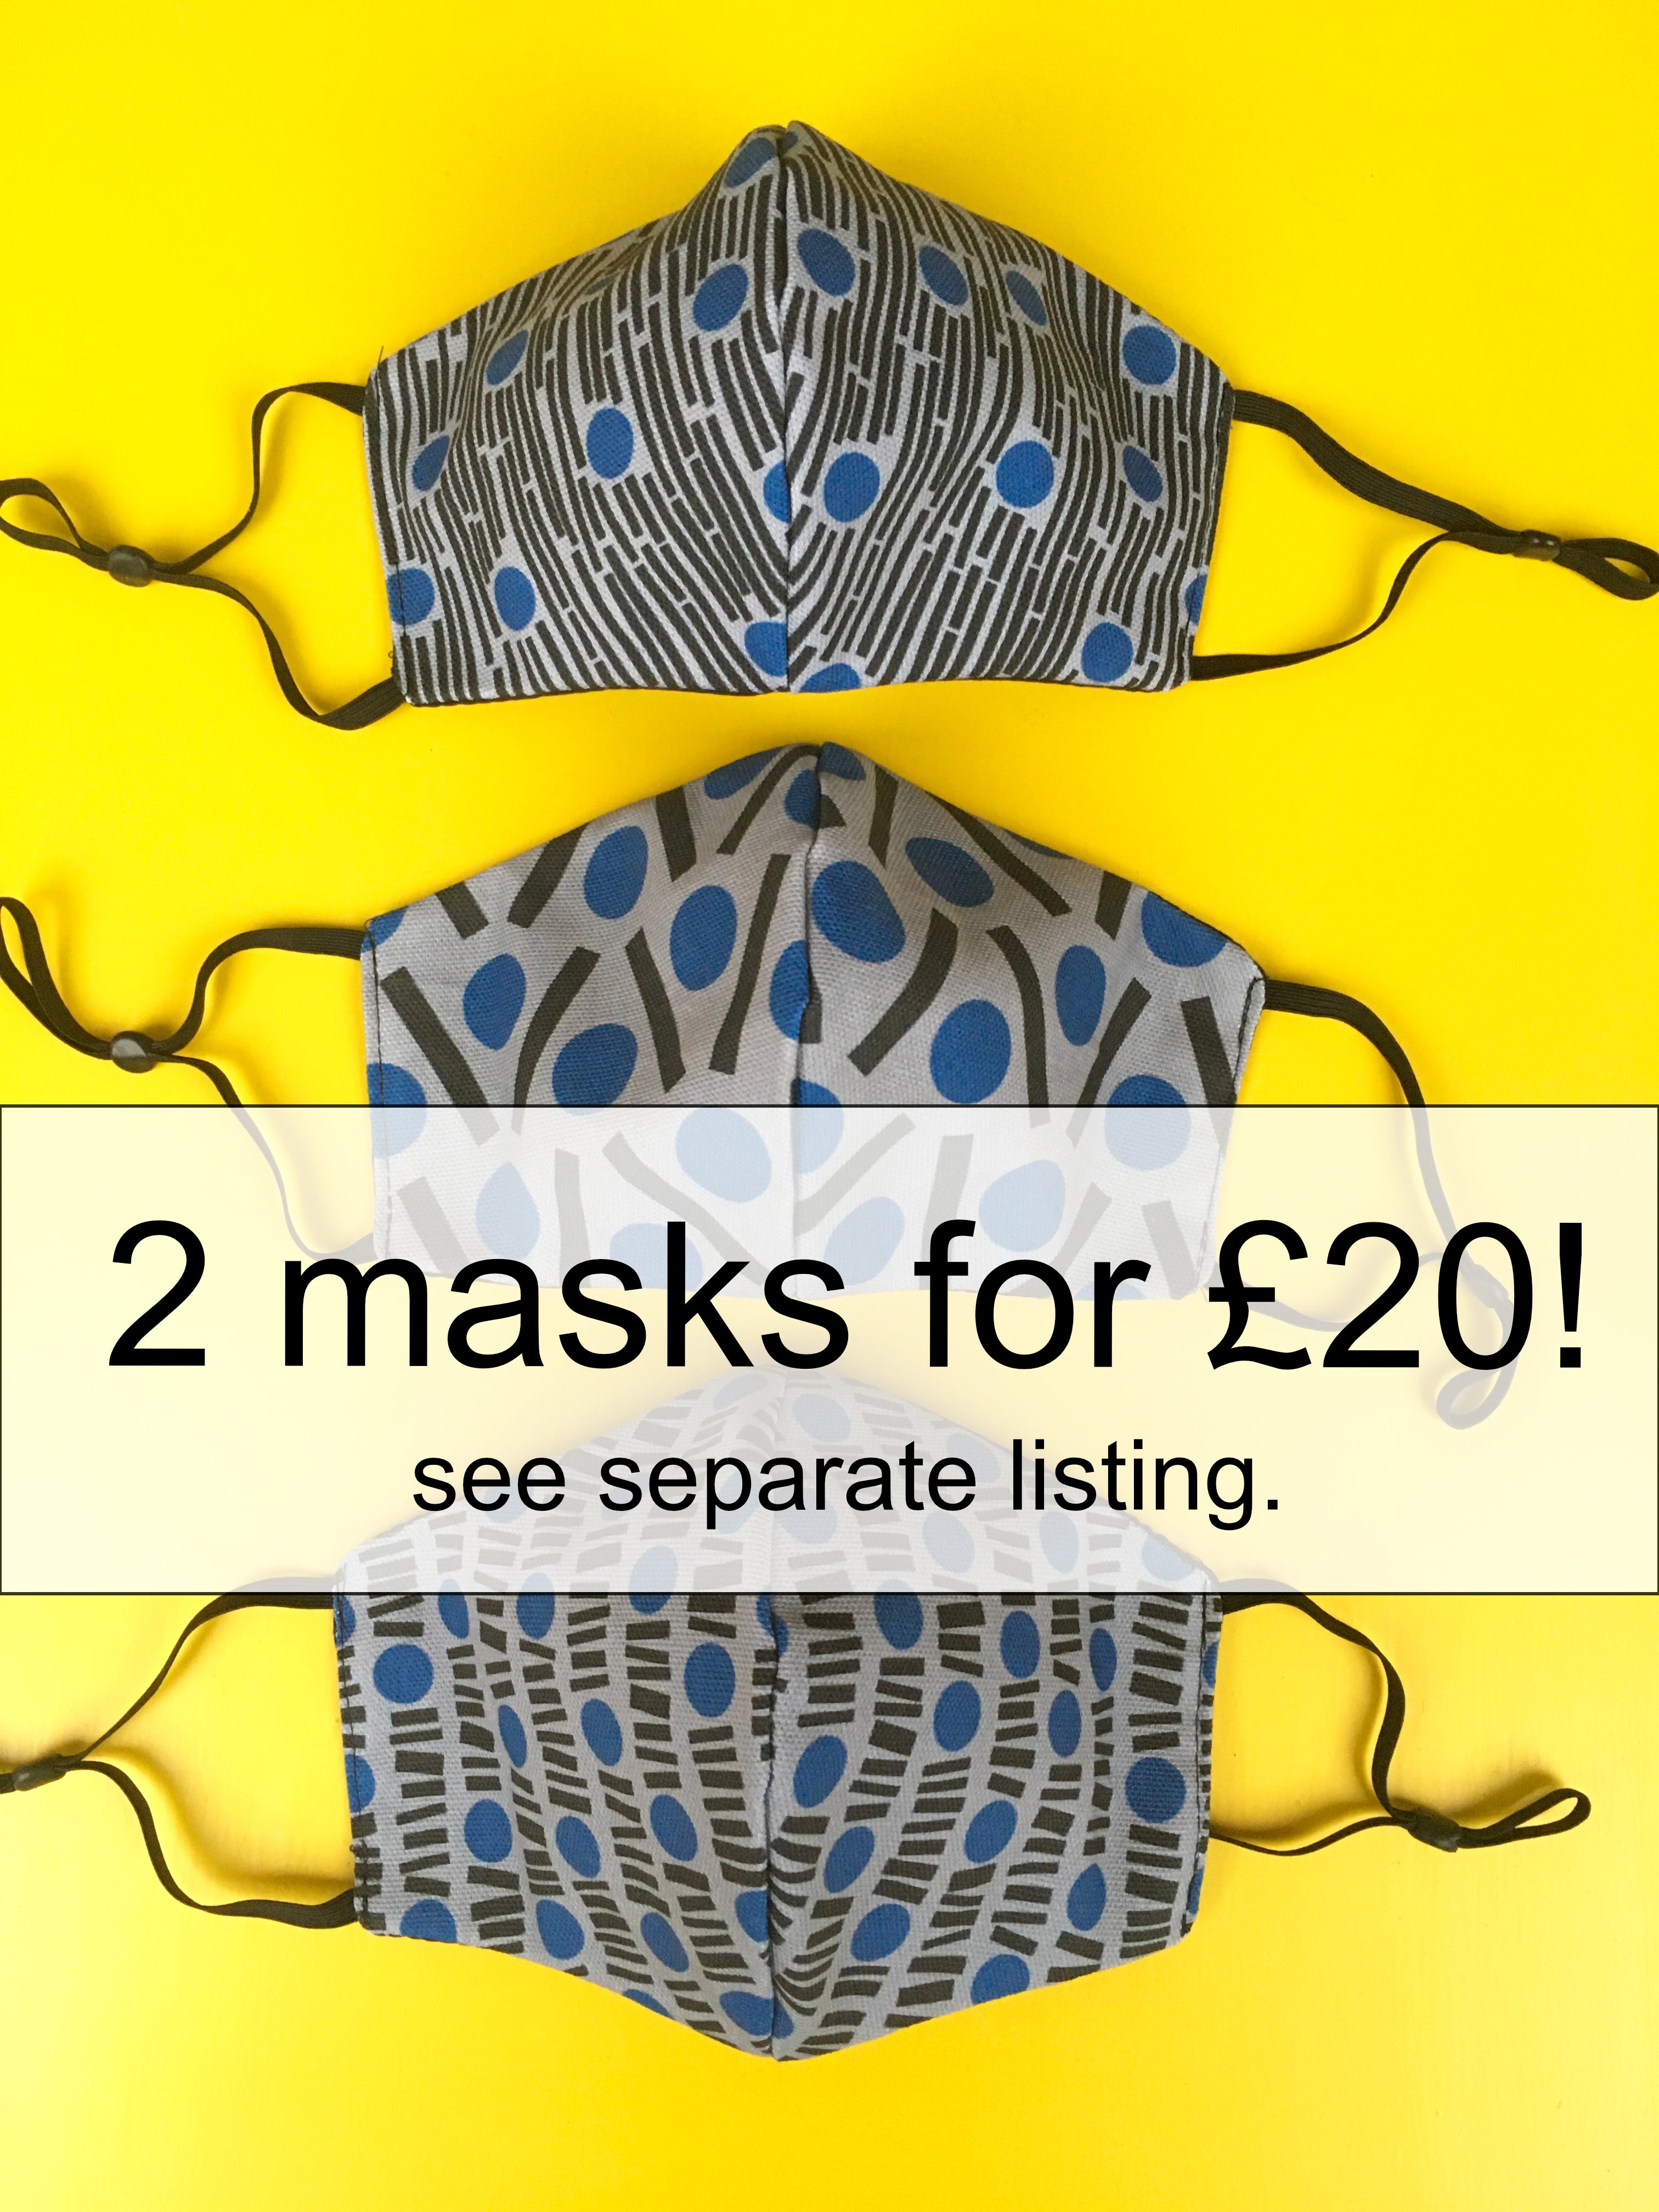 Blue face mask - Chevron - now on Sale!